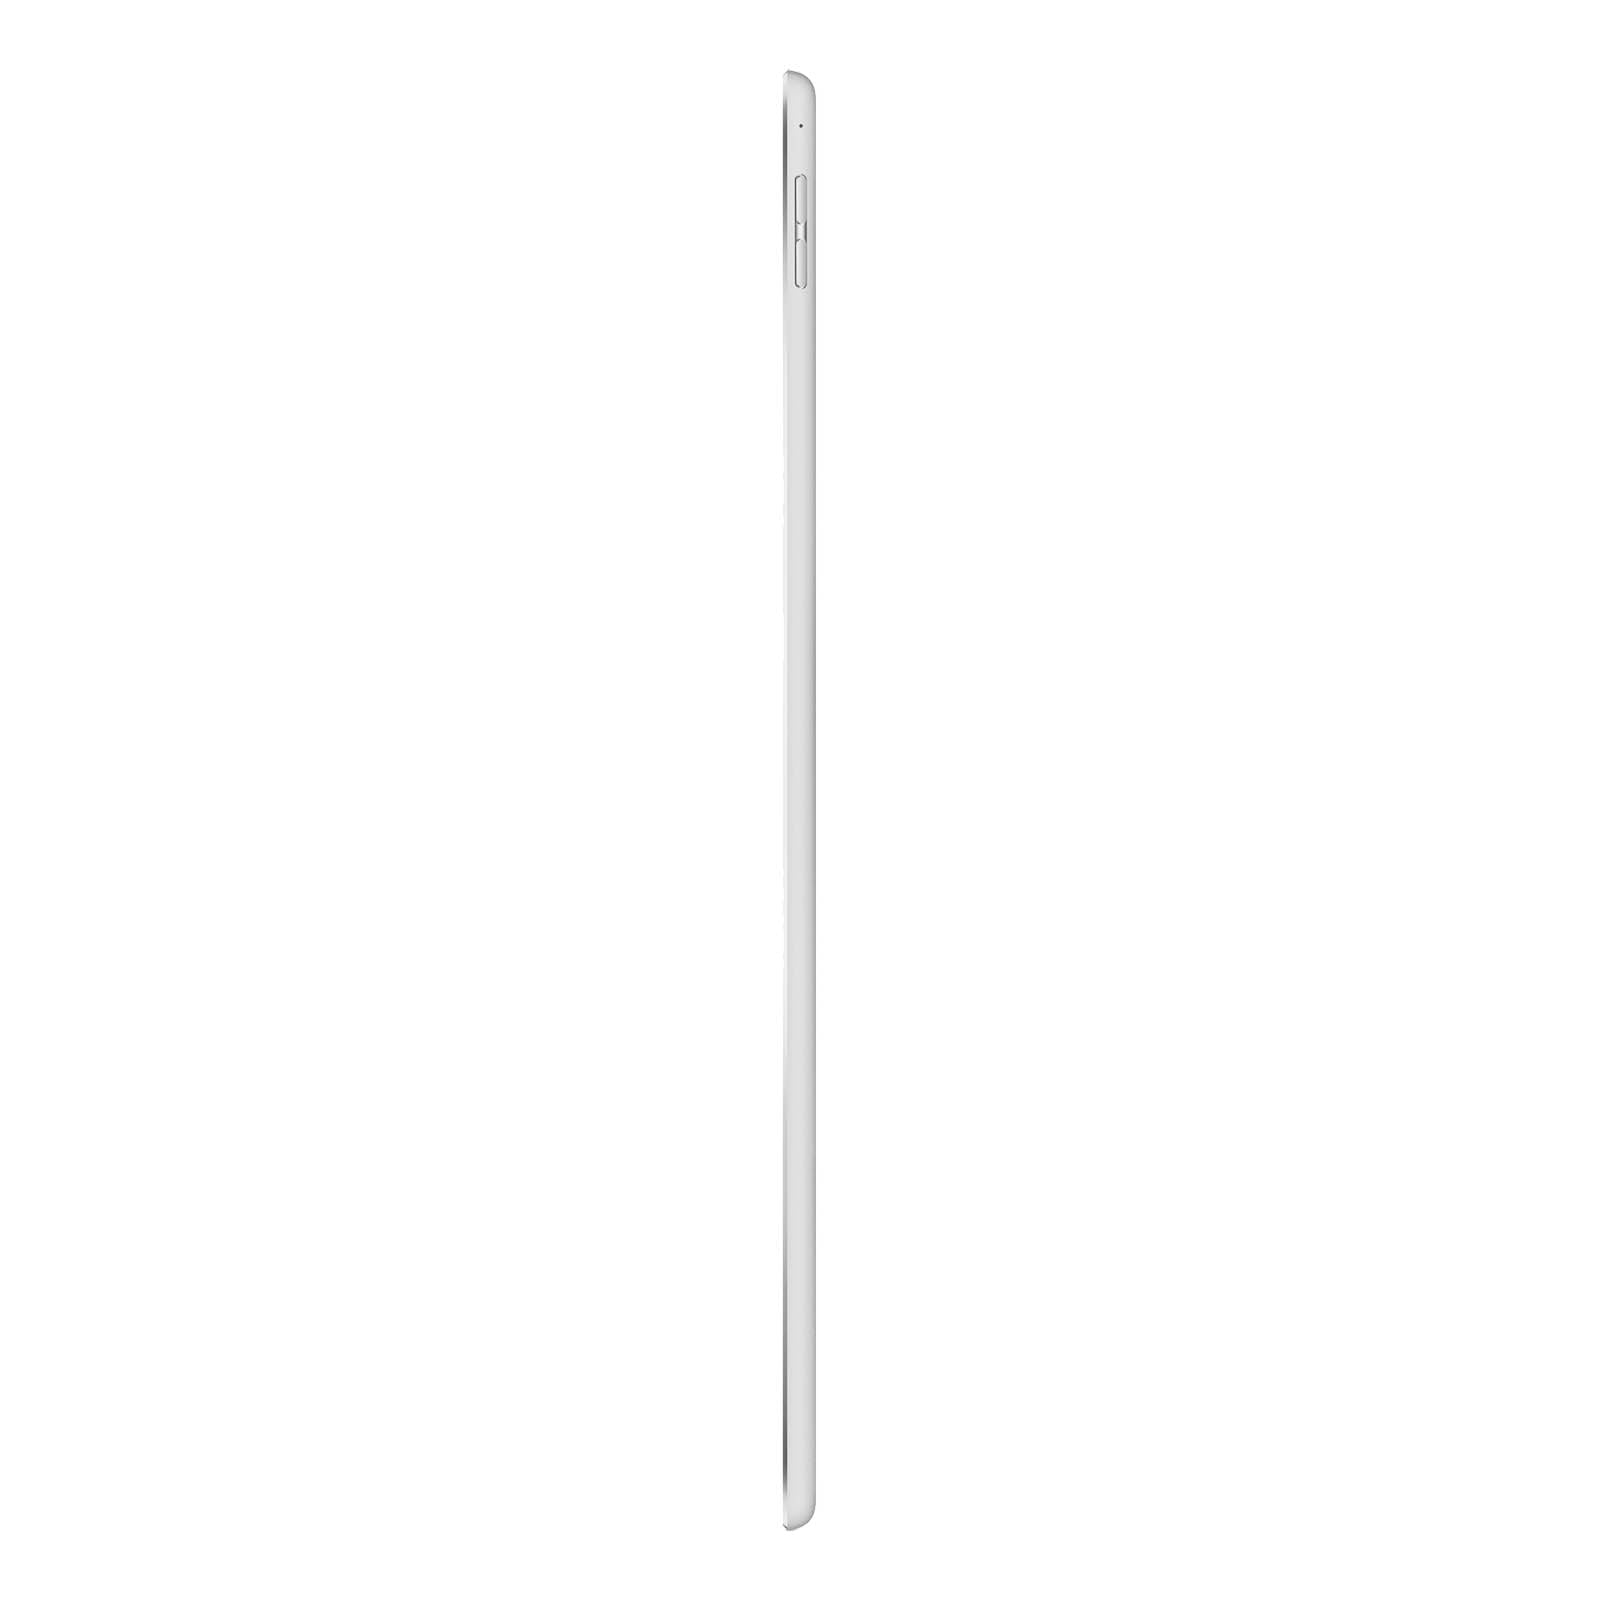 iPad Pro 12.9 Inch 2nd Gen 64GB Silver Good - WiFi